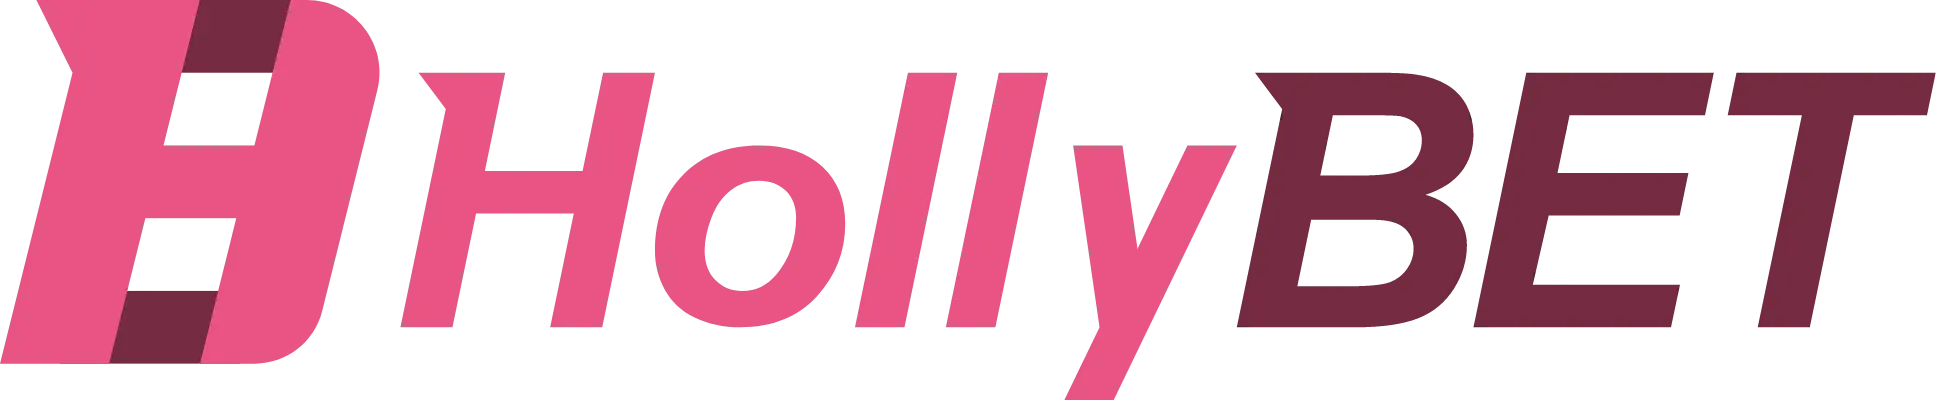 hollybet-logo